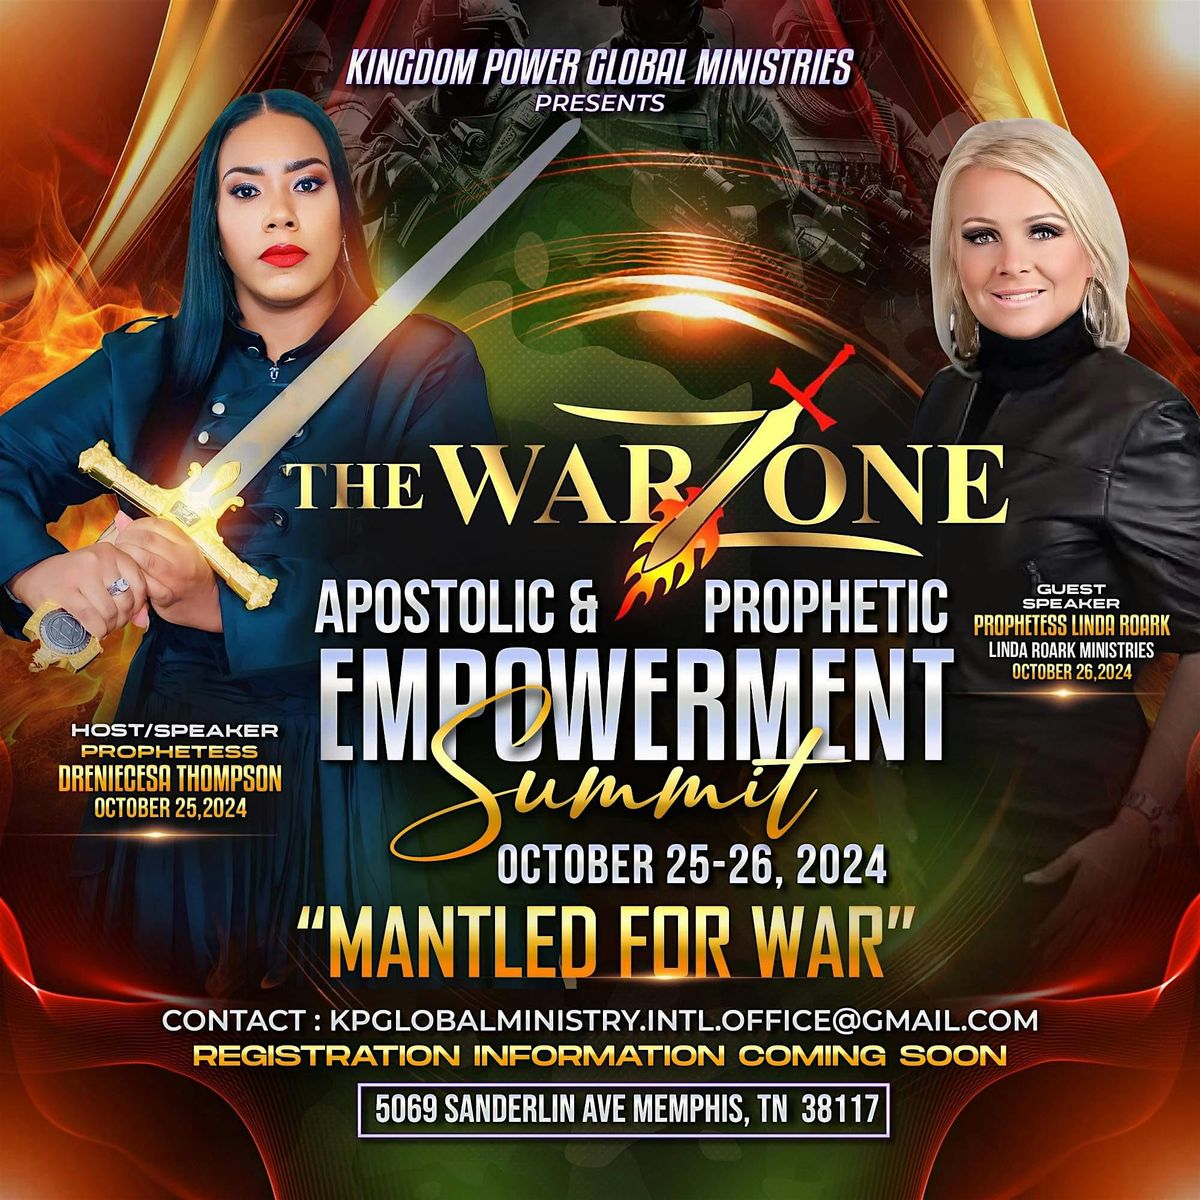 \u201cTHE WARZONE\u201d Apostolic & Prophetic Empowerment Summit 2024